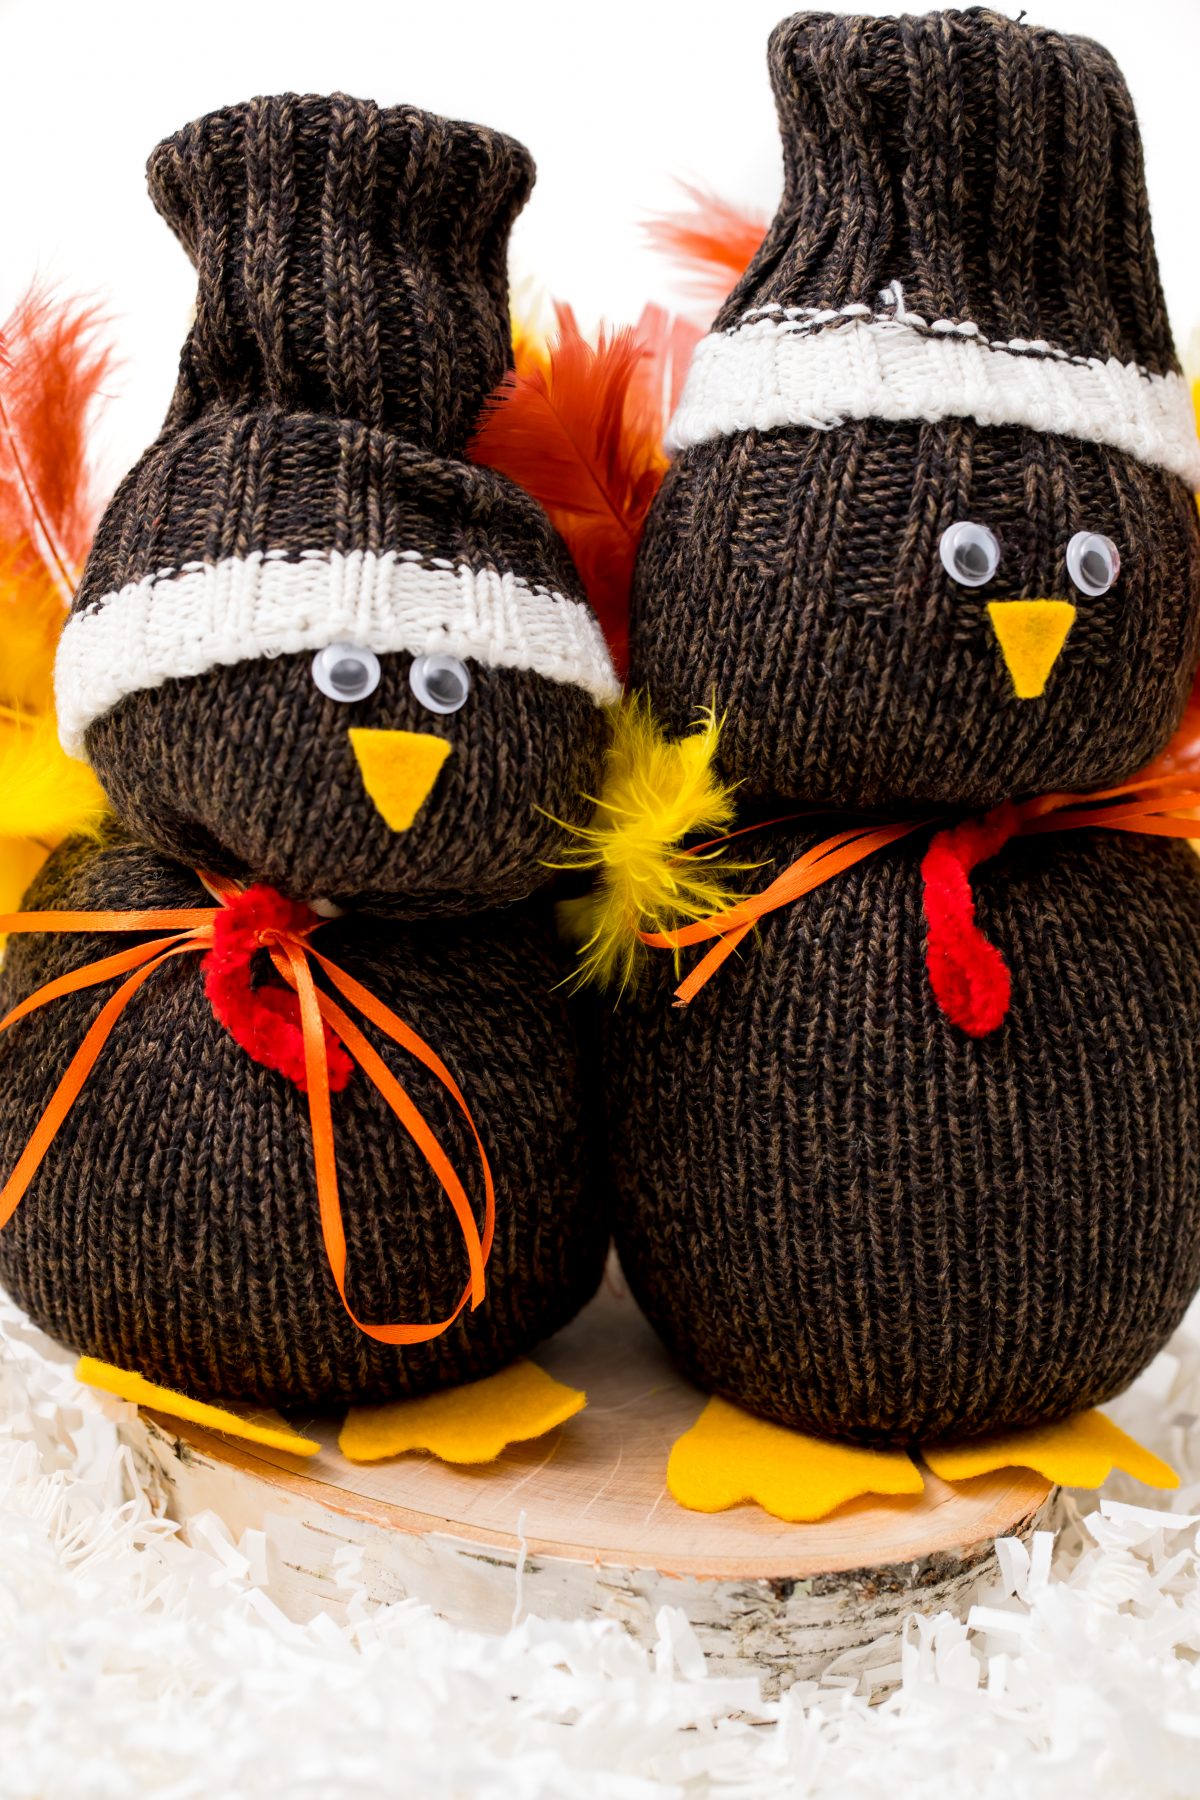 Adorable little sock turkeys